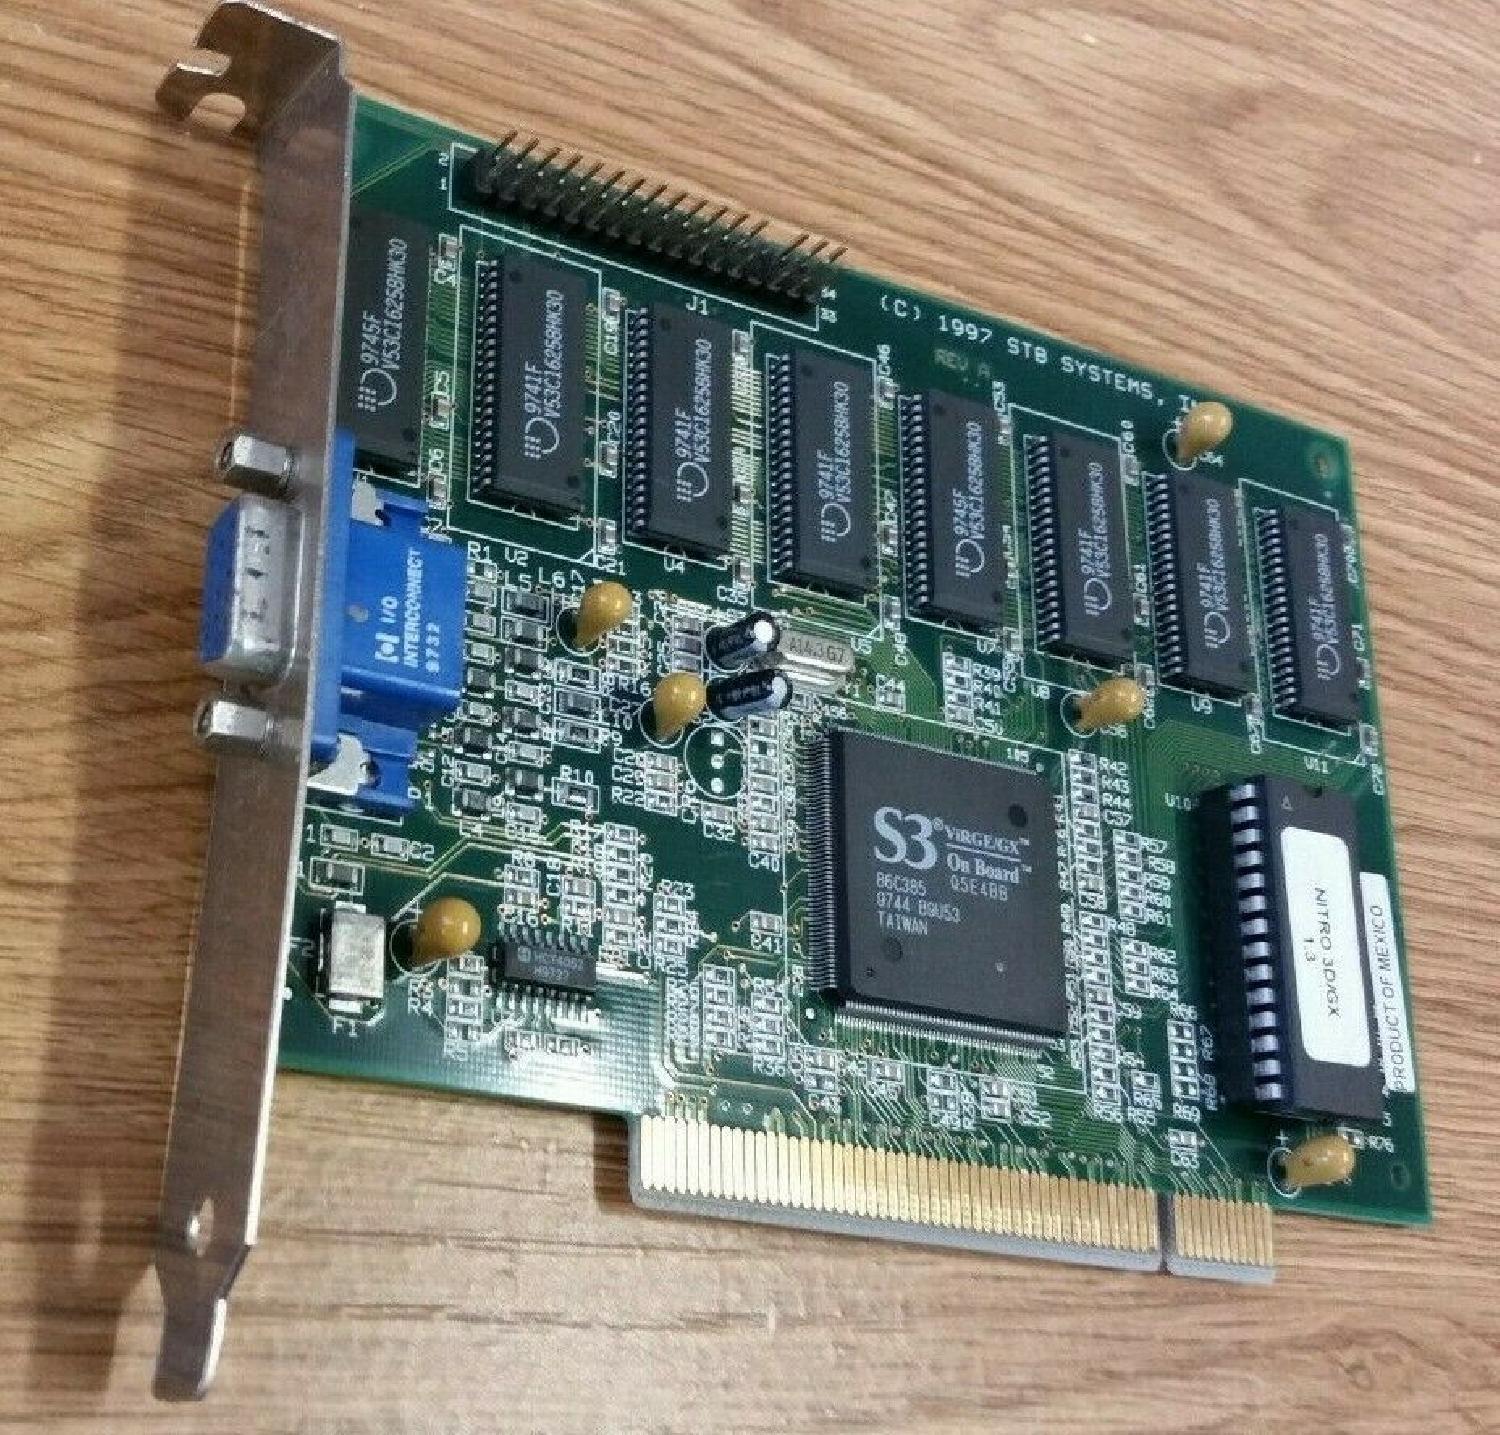 1X0-0489-005 STB SYSTEMS INC PARADISE VGA PCI NITRO 3D/GX S3 VIRGE/GX 86C385 VI